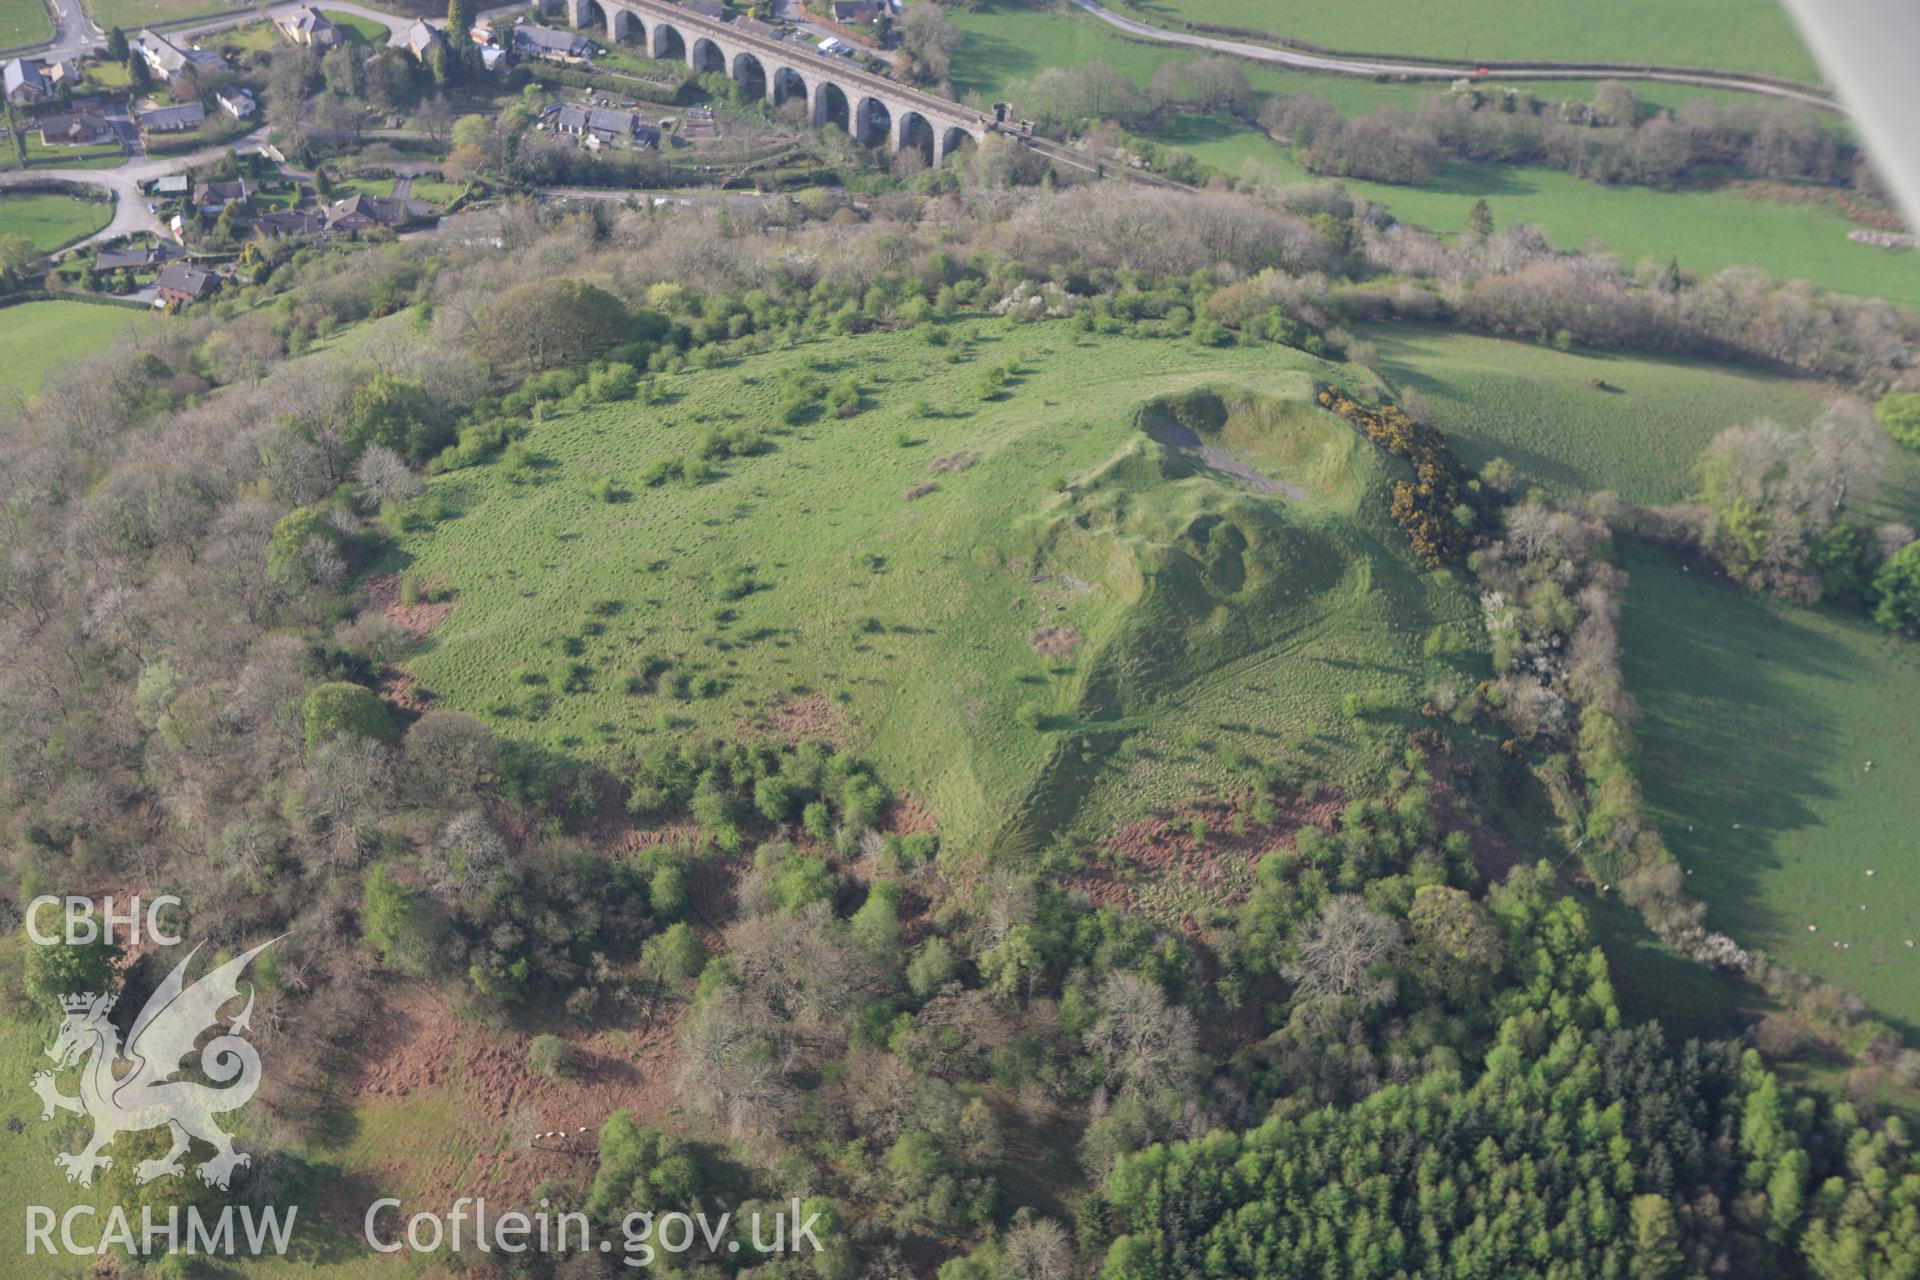 RCAHMW colour oblique aerial photograph of Cnwclas Castle. Taken on 21 April 2009 by Toby Driver